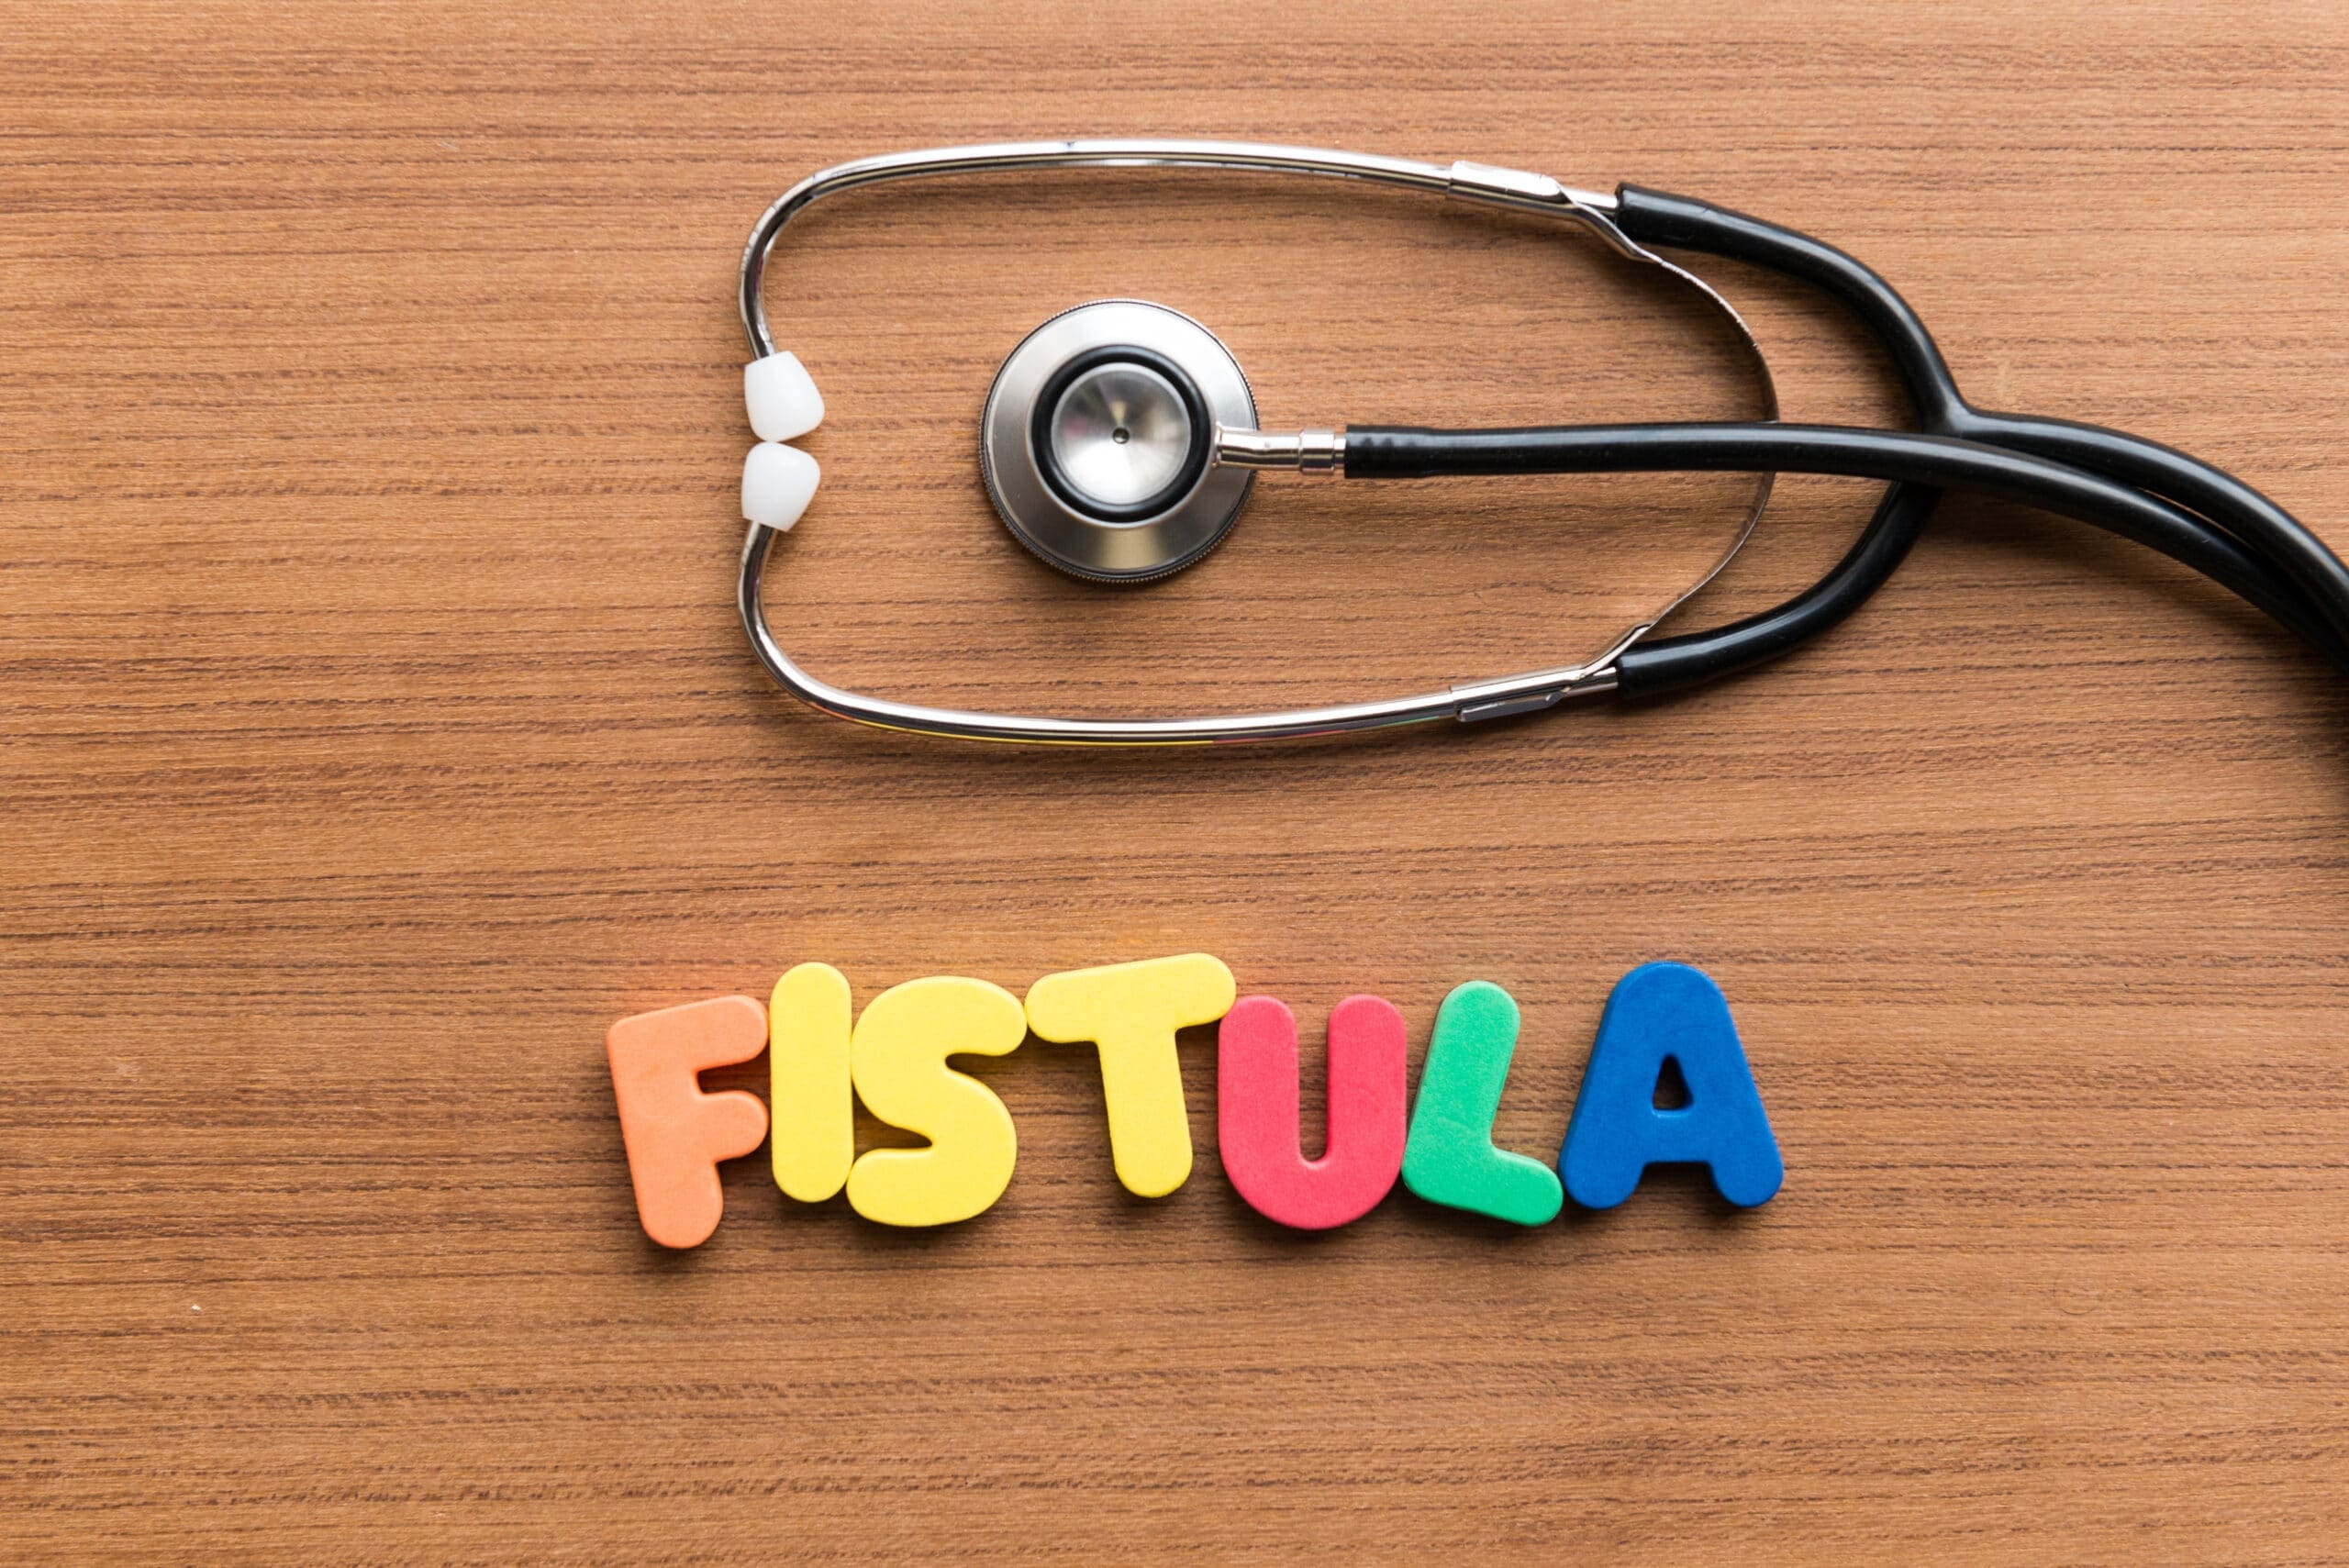 Video: Fistula – Dr Naseem